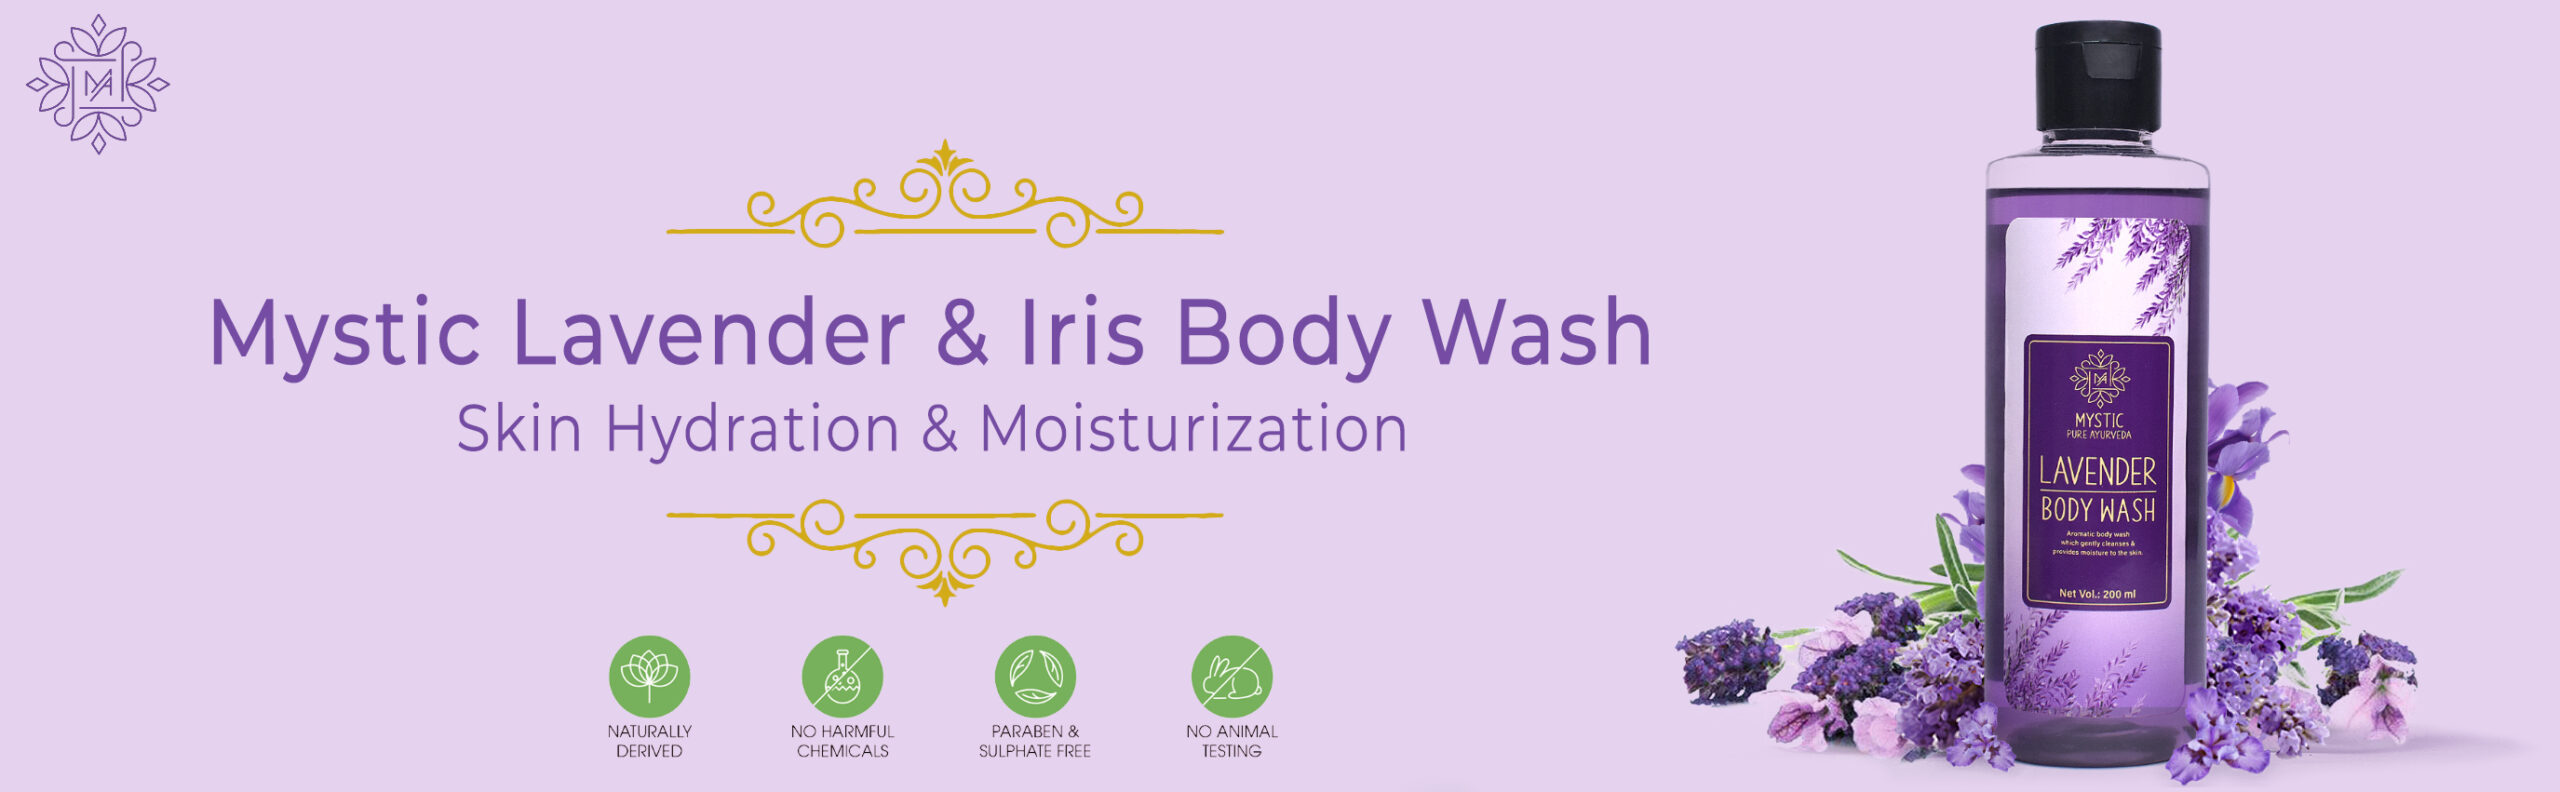 Mystic Lavender and Iris Body Wash